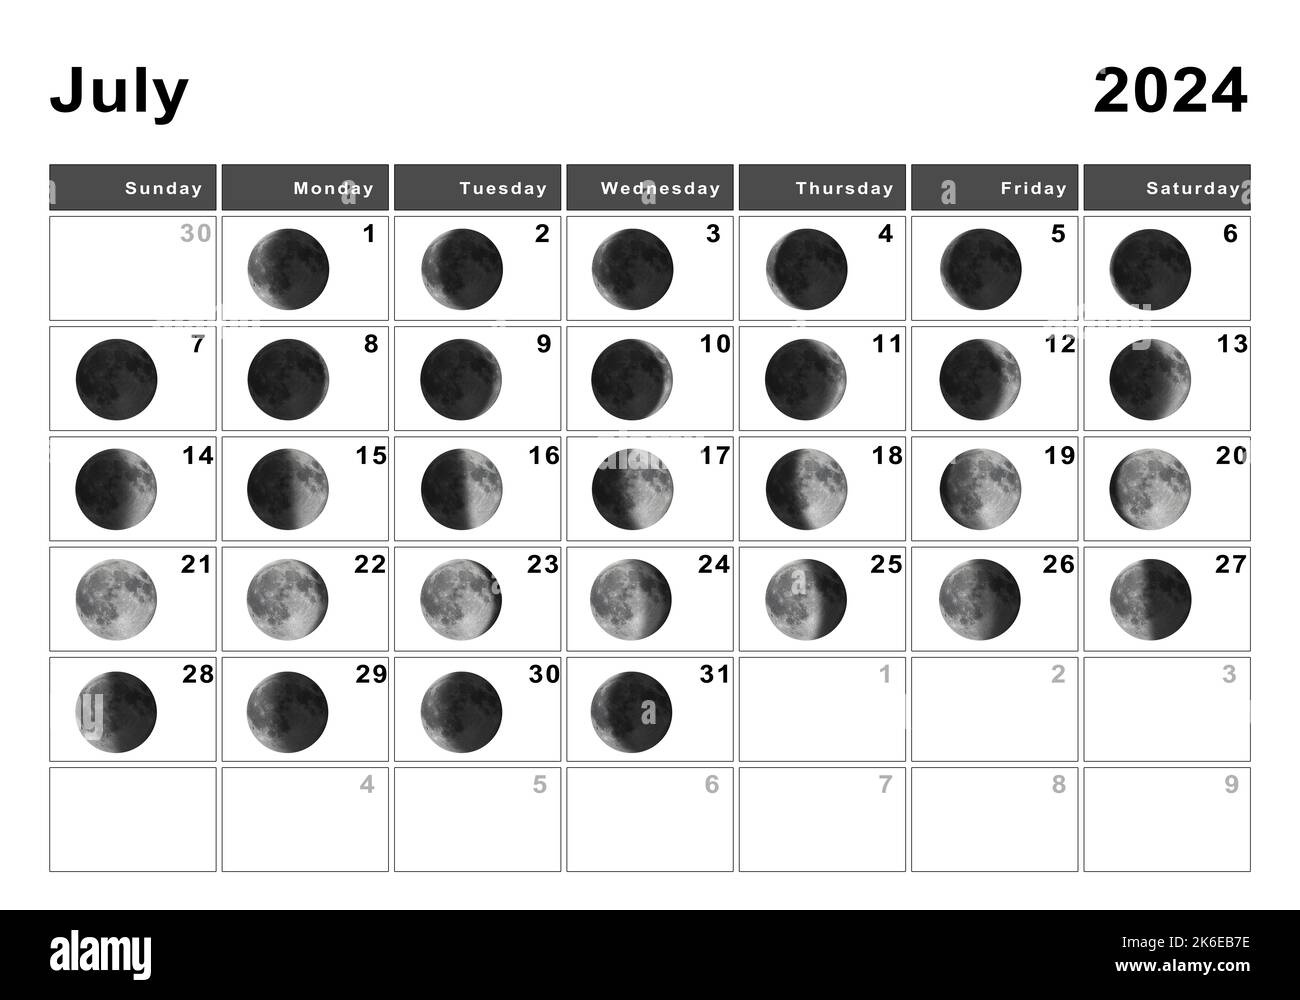 July 2024 Lunar Calendar, Moon Cycles, Moon Phases Stock Photo - Alamy with July 10 Lunar Calendar 2024